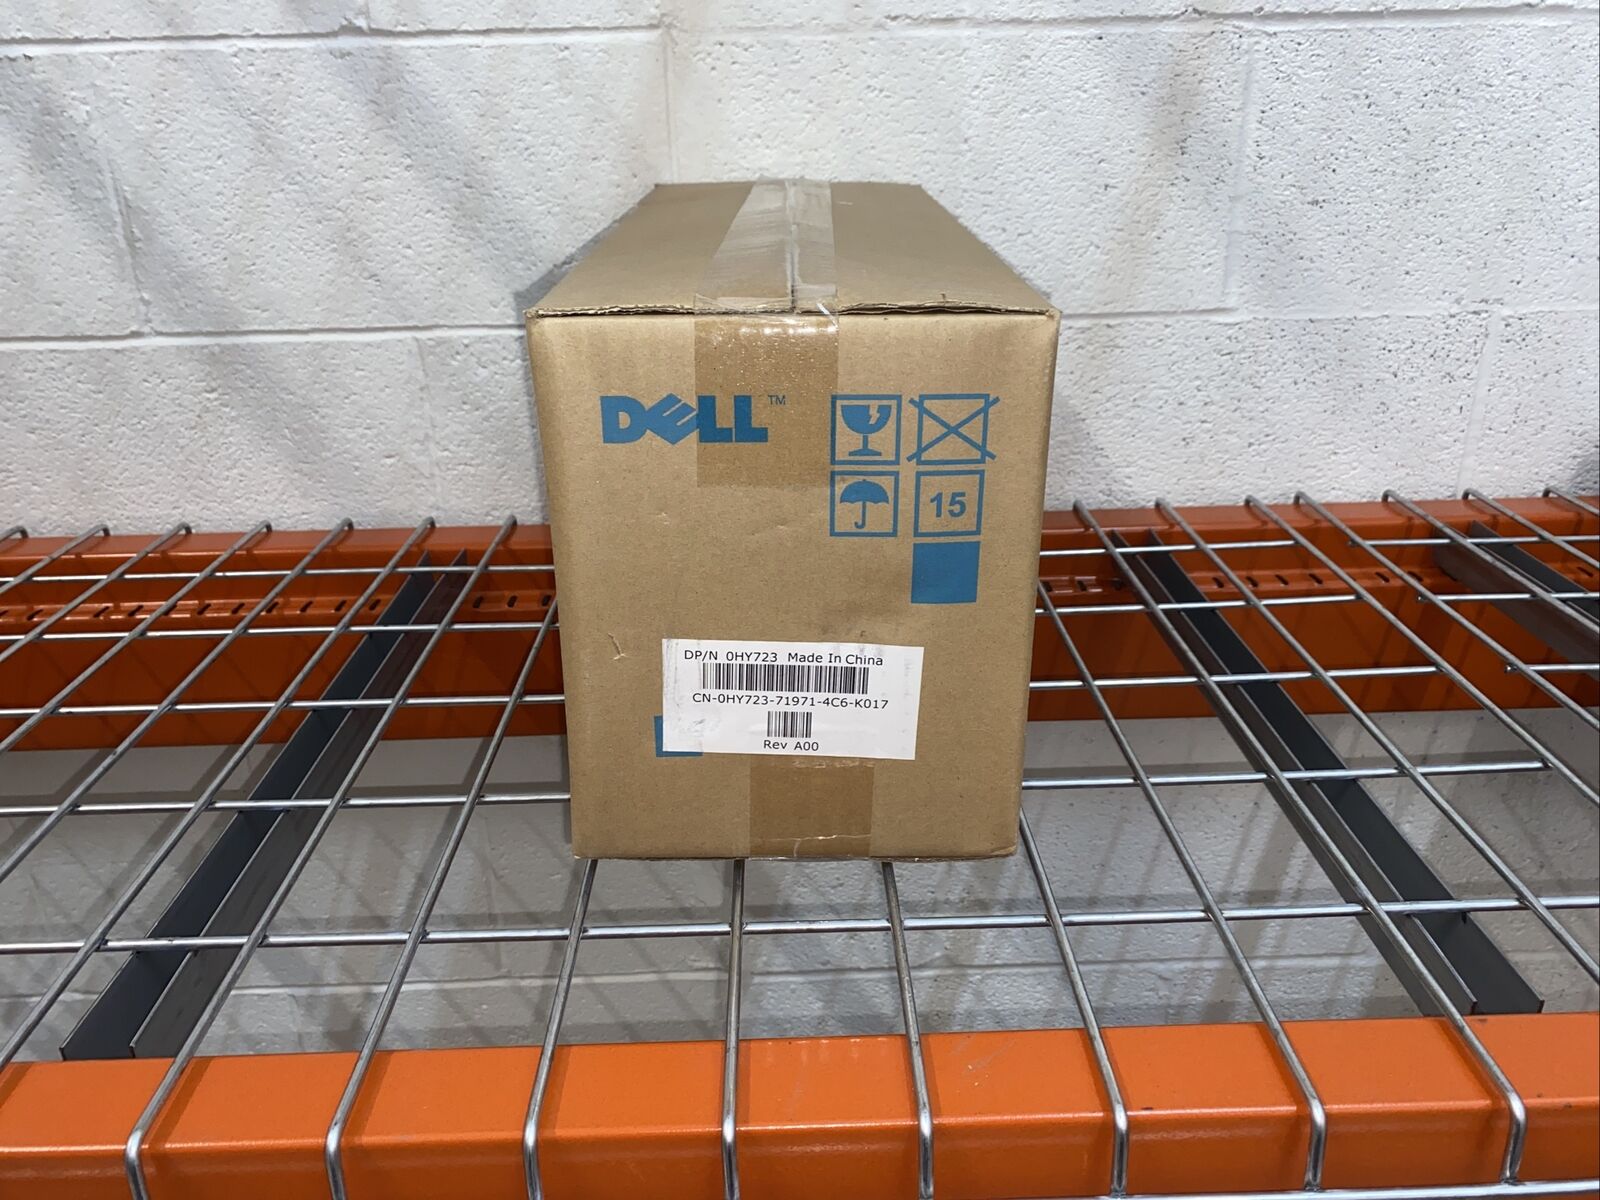 NEW - Sealed - Genuine Dell 0HY723 5100CN Color Printer Fuser